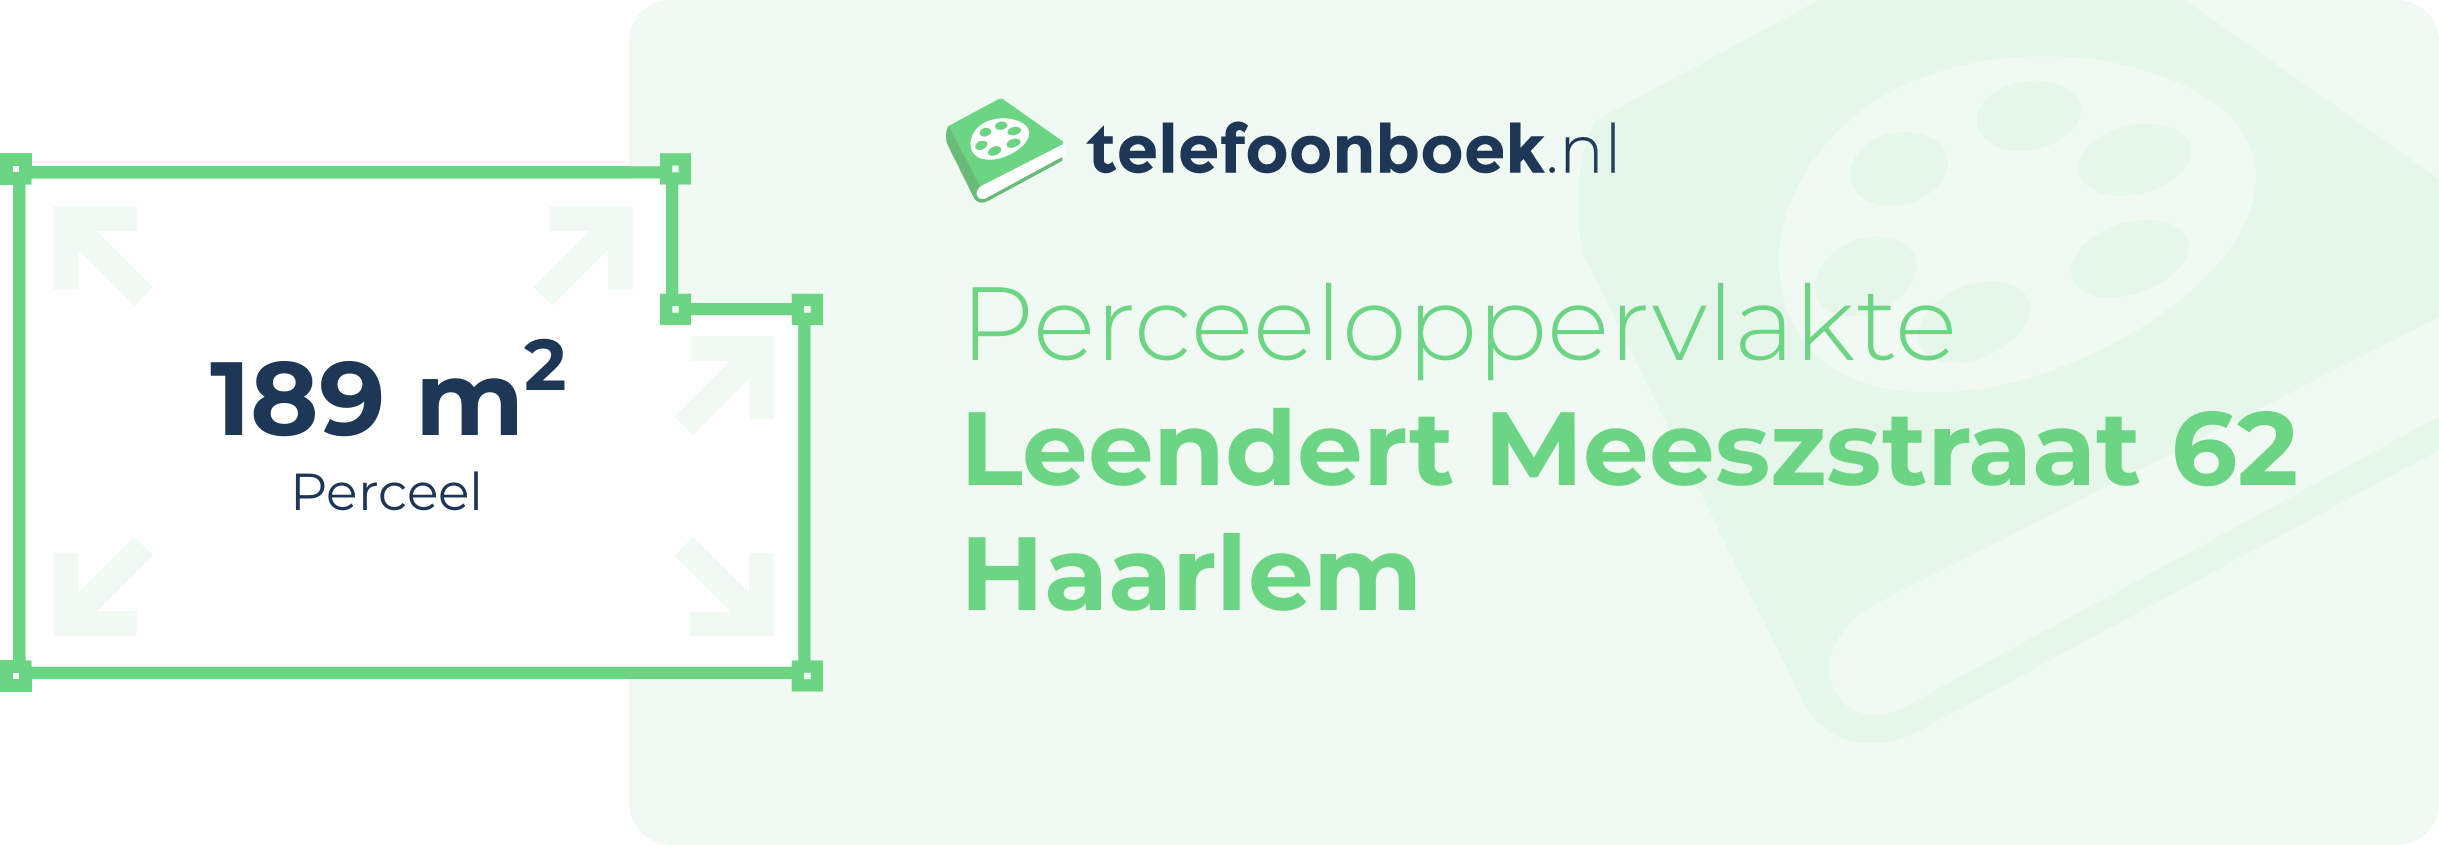 Perceeloppervlakte Leendert Meeszstraat 62 Haarlem